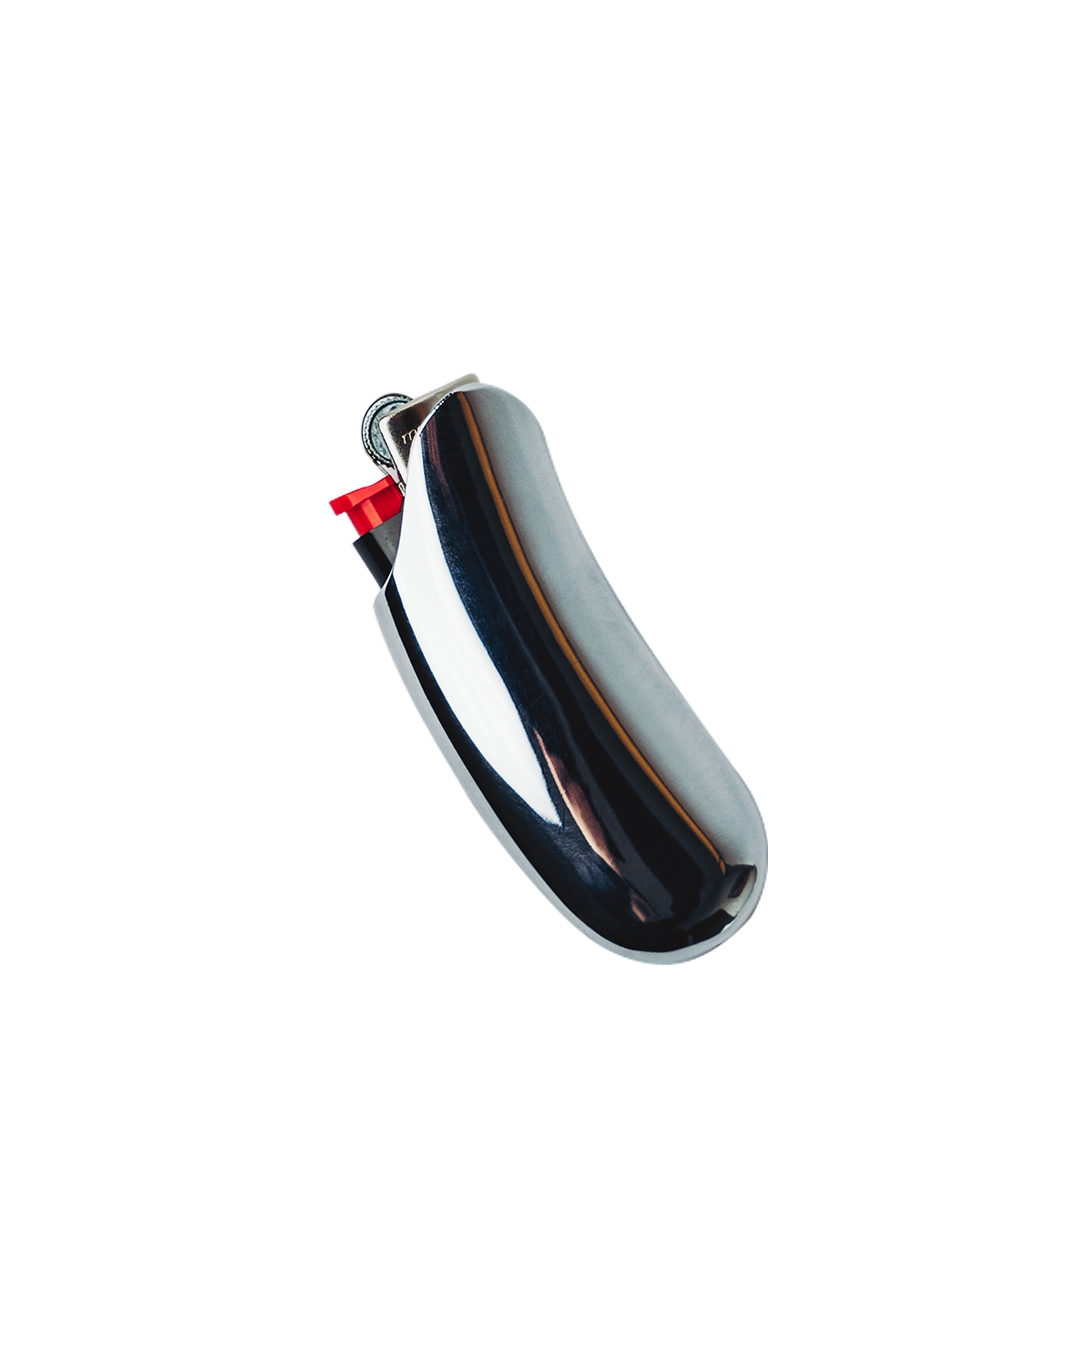 Lighter Sleeve Case Luxury Series for Mini Bic Lighter (1, Silver)